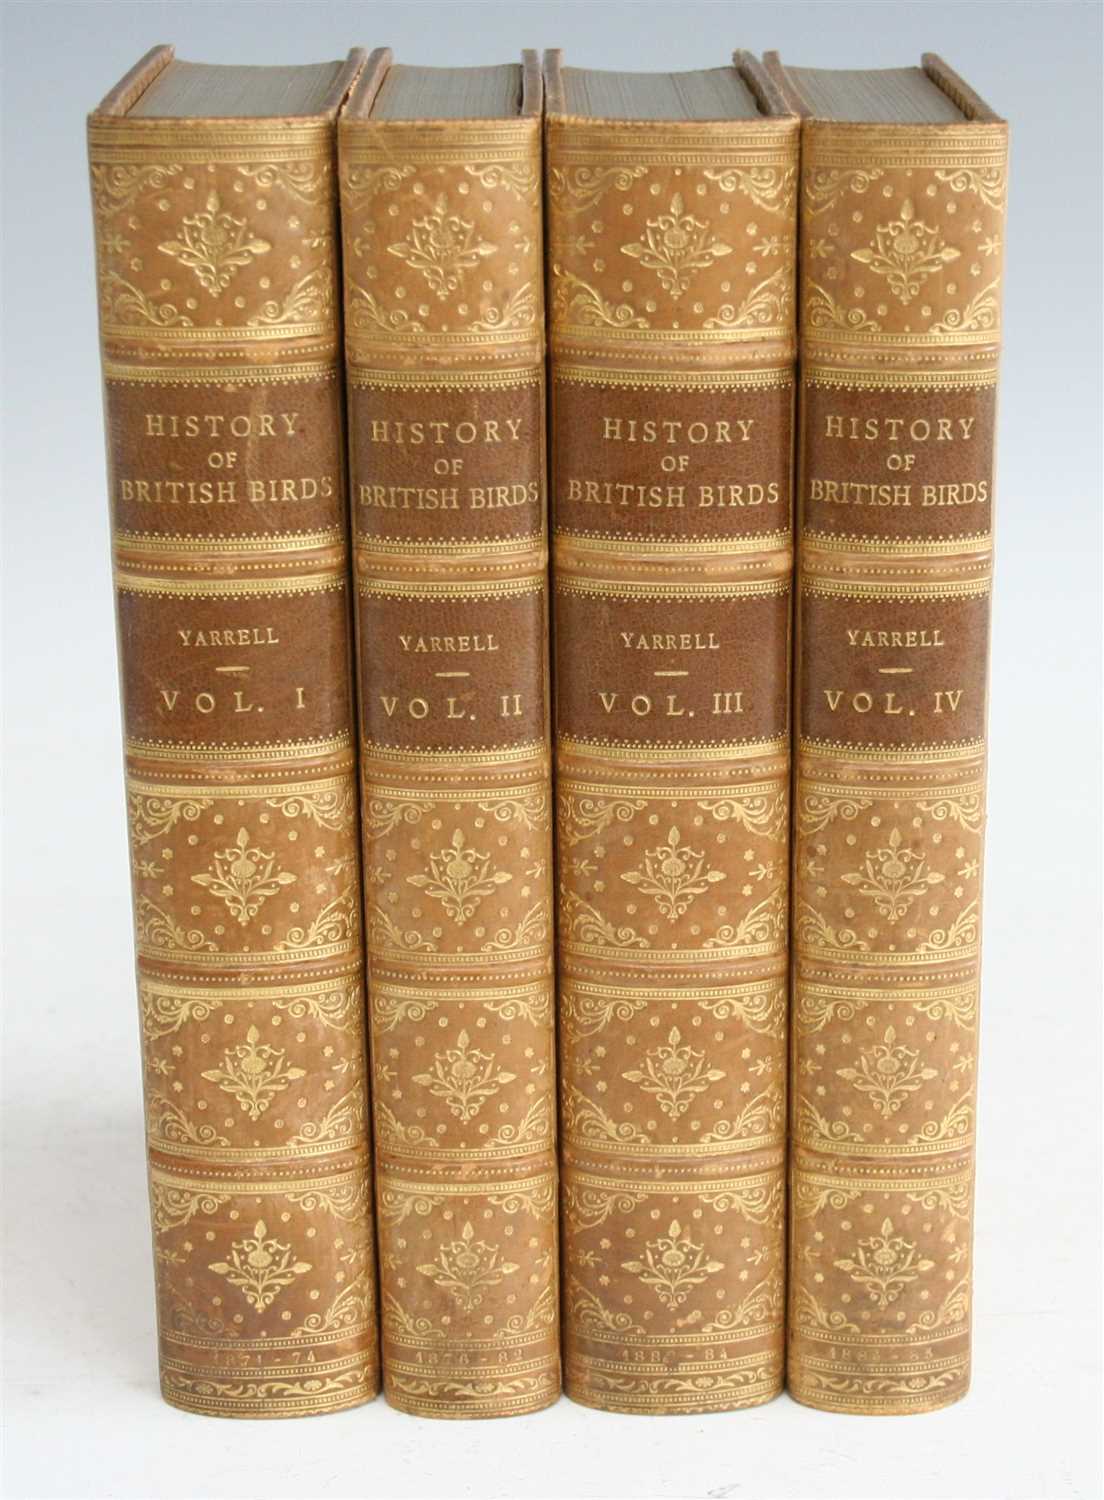 Lot 1280 - YARRELL, William, A History of British Birds,...